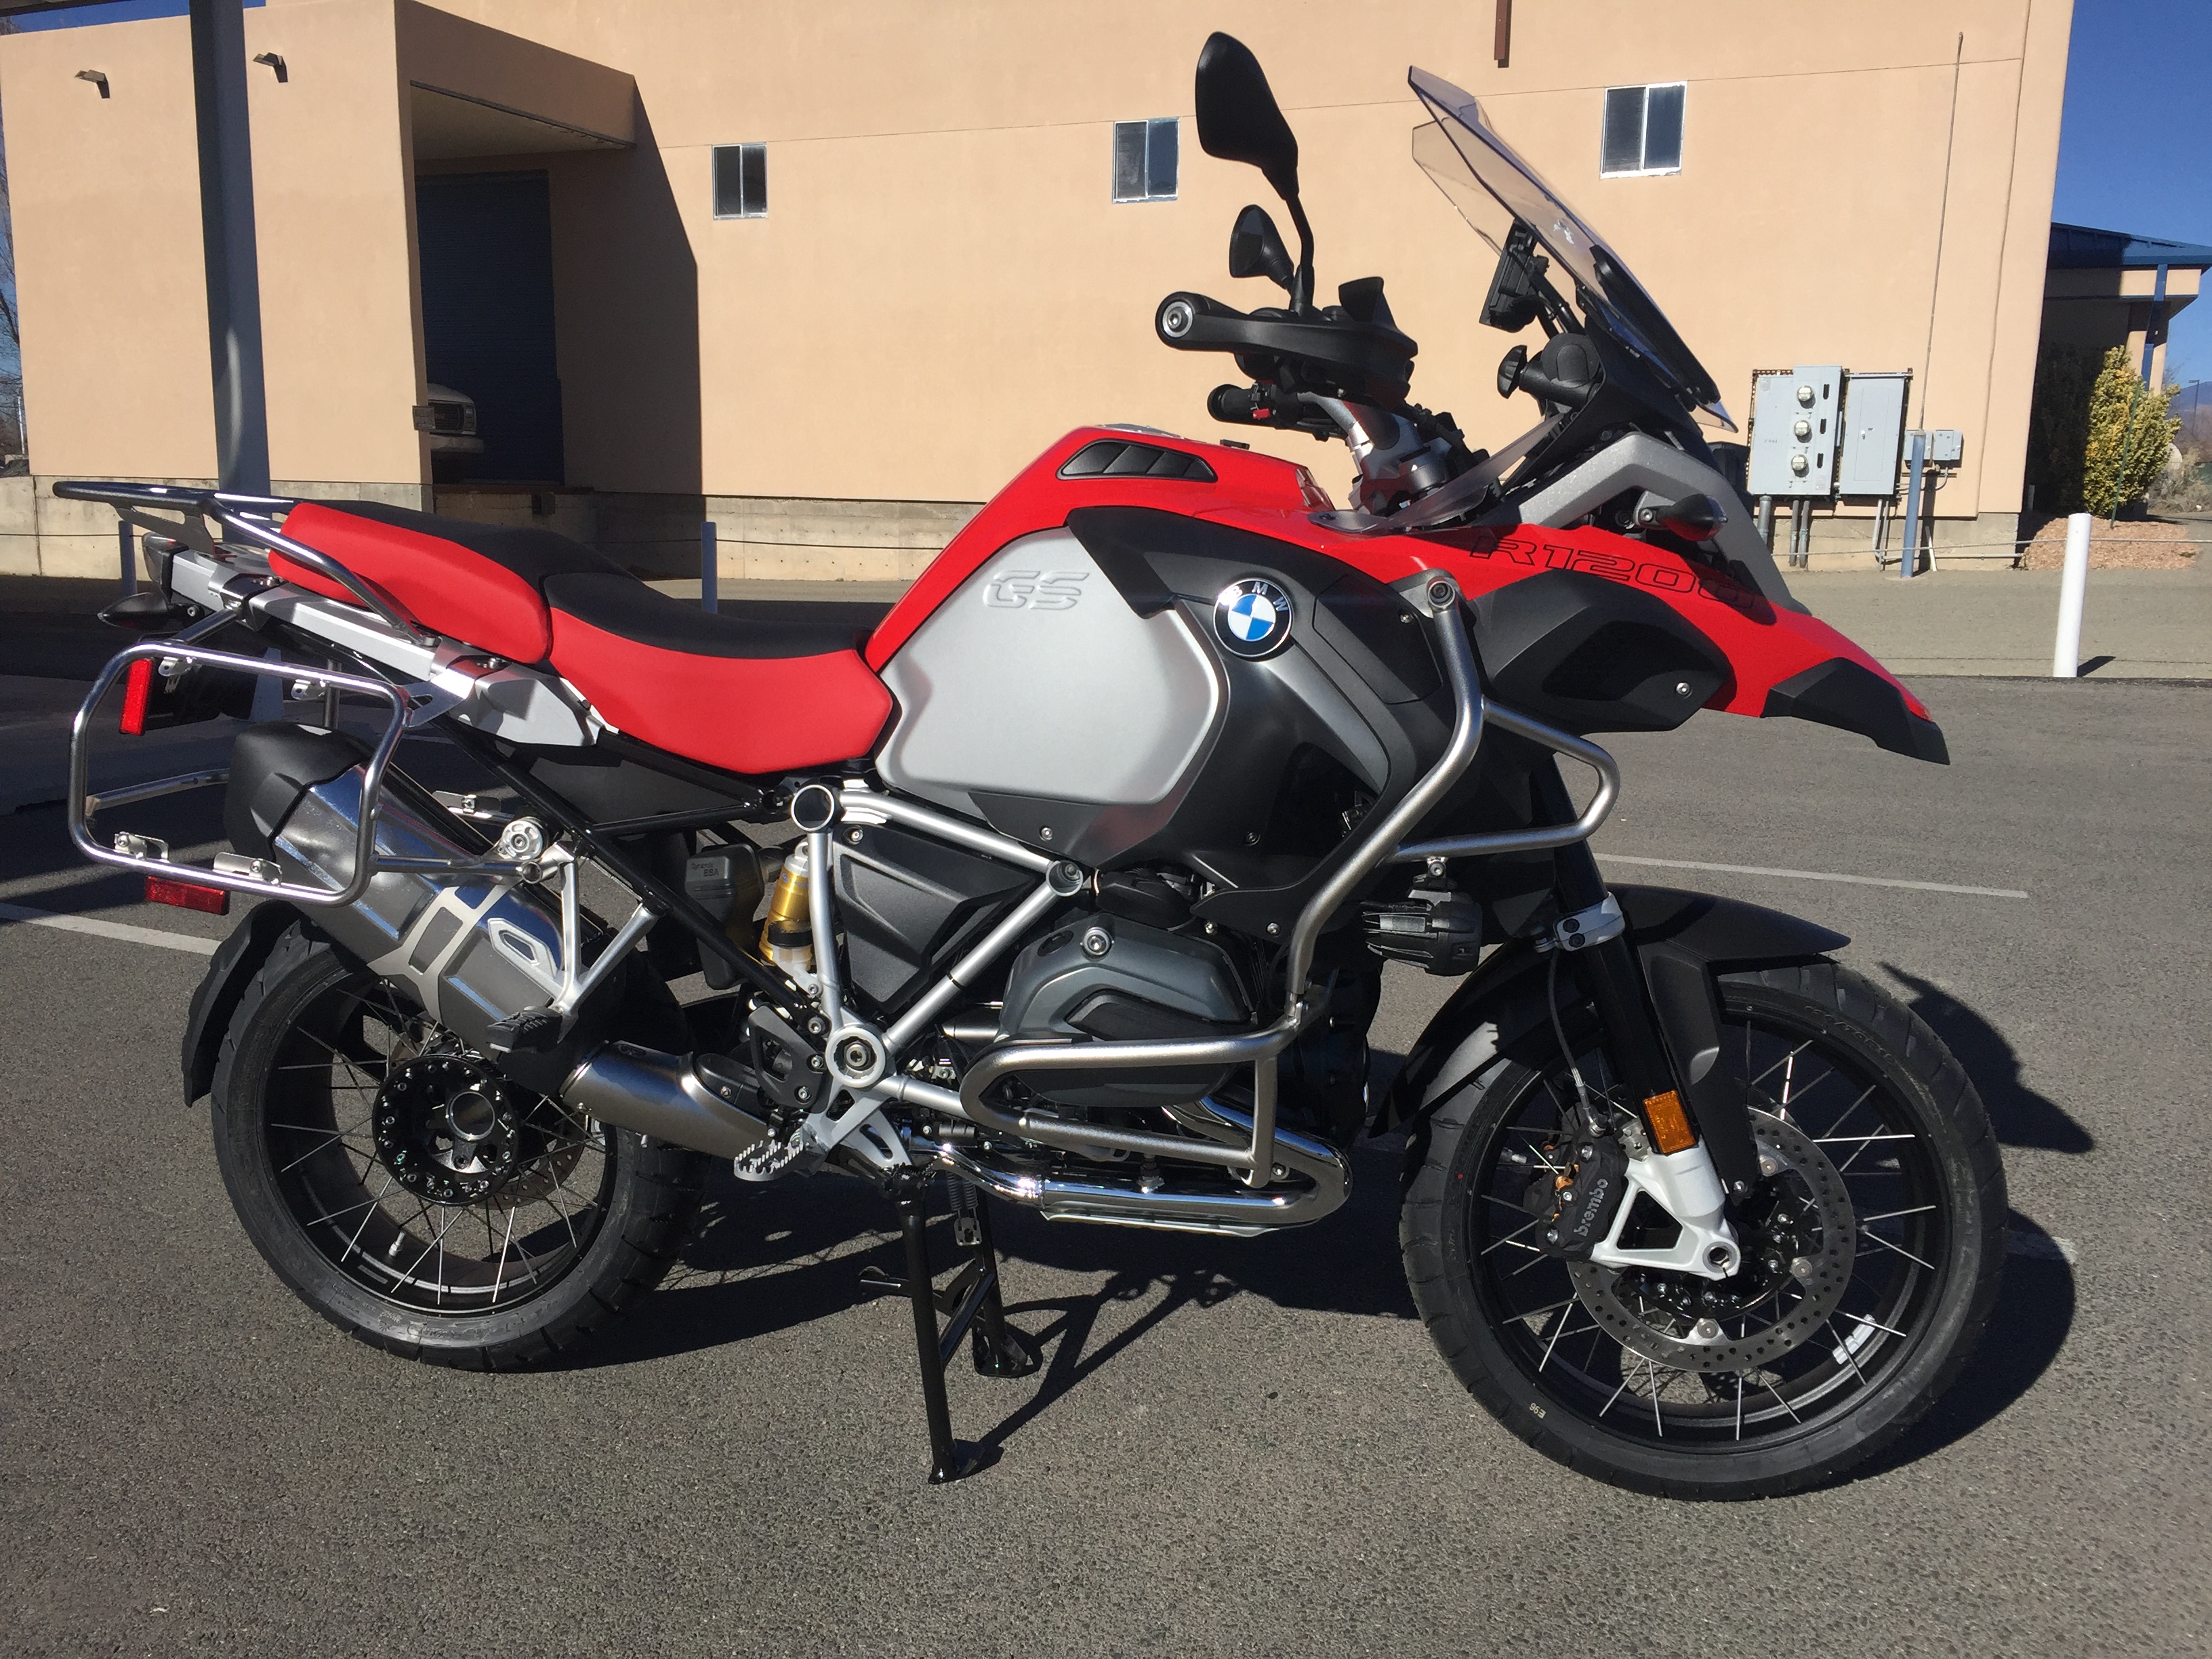 New BMW Motorcycles - R1200GSADV | Santa Fe BMW Motorcycles | Santa Fe, NM